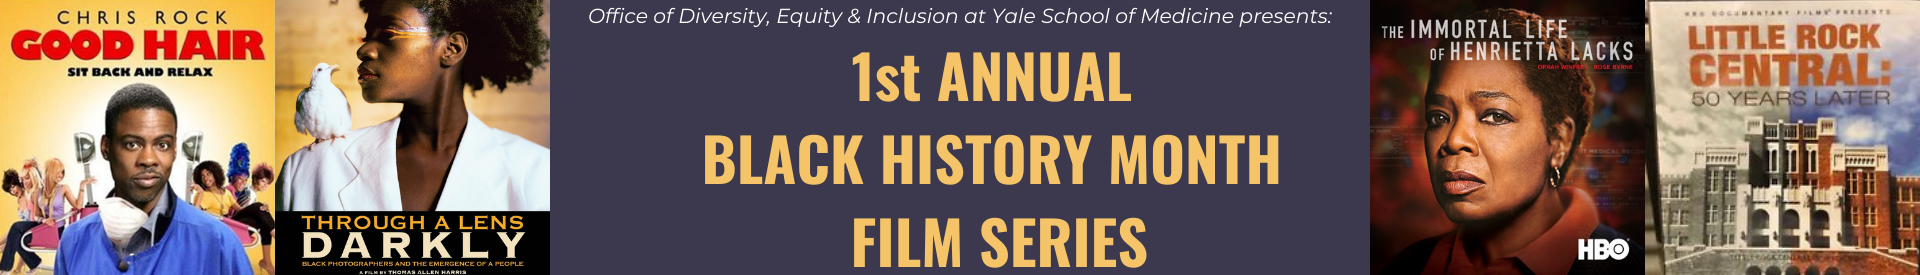 Yale School of Medicine Black History Month Film Series